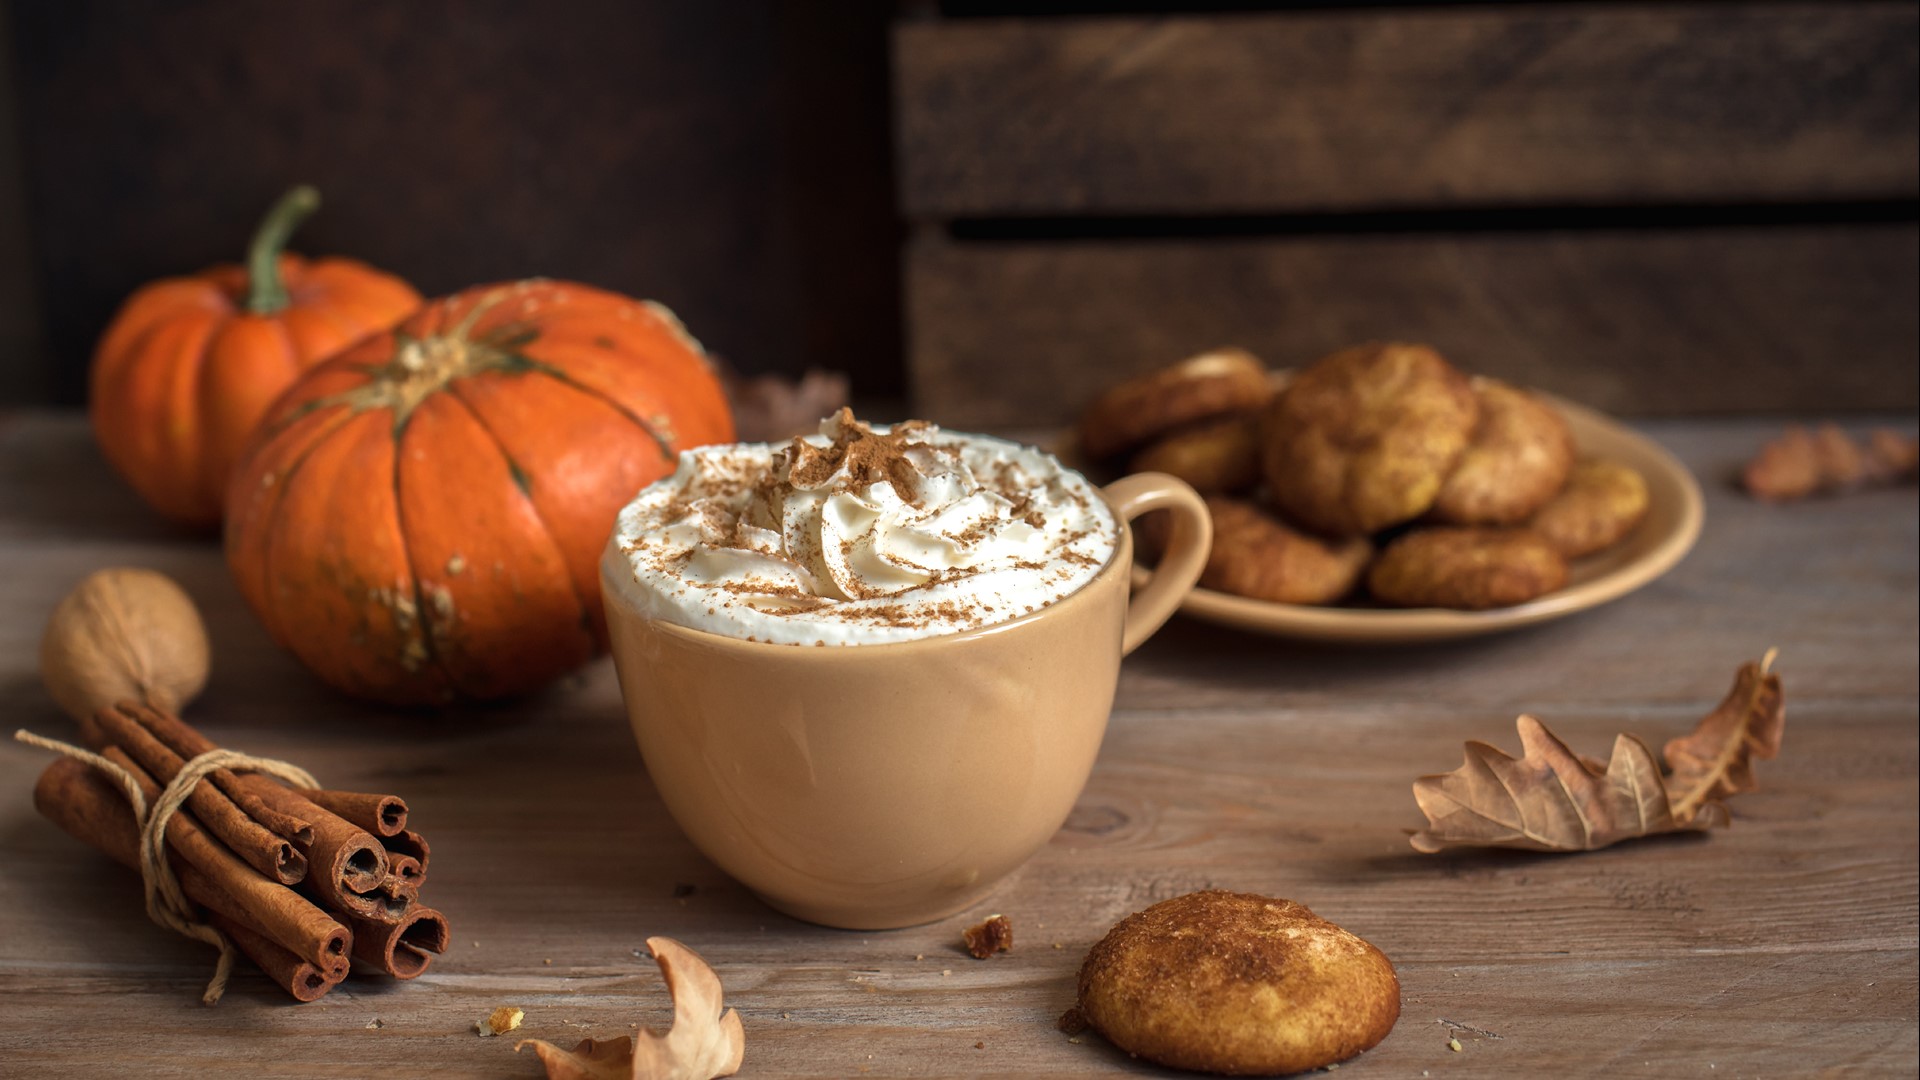 Starbucks' Pumpkin Spice Latte is back: Here's the fall 2021 menunews.com